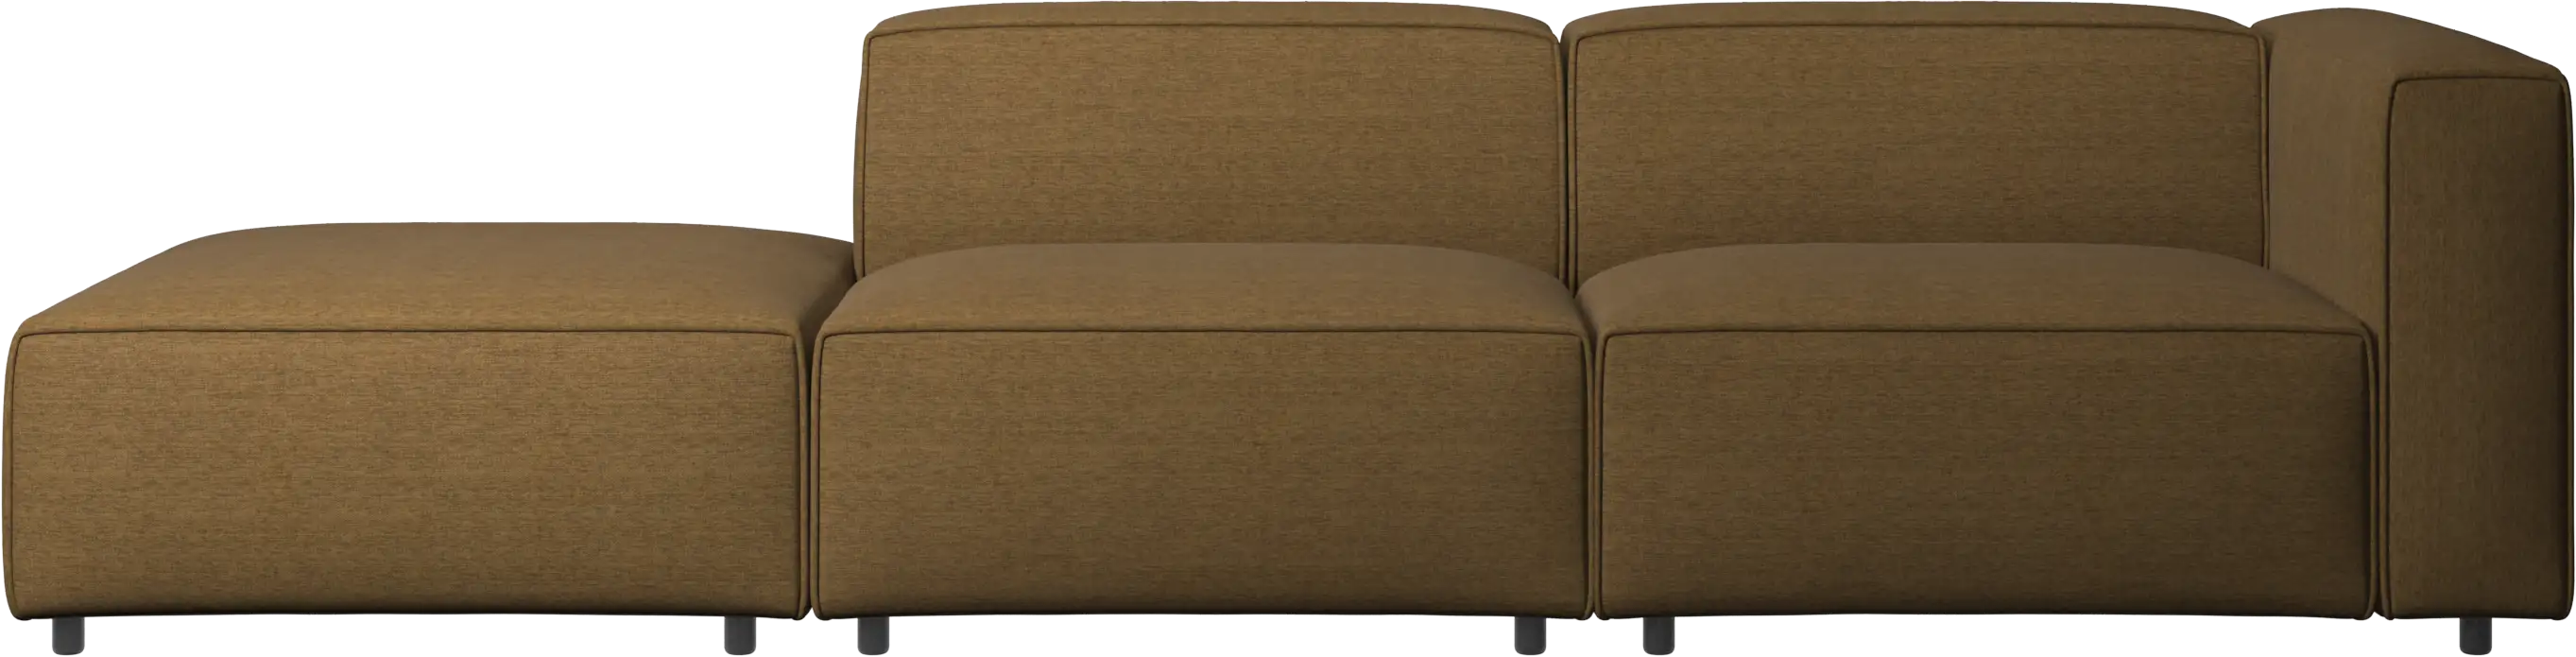 Carmo sofa with lounging unit